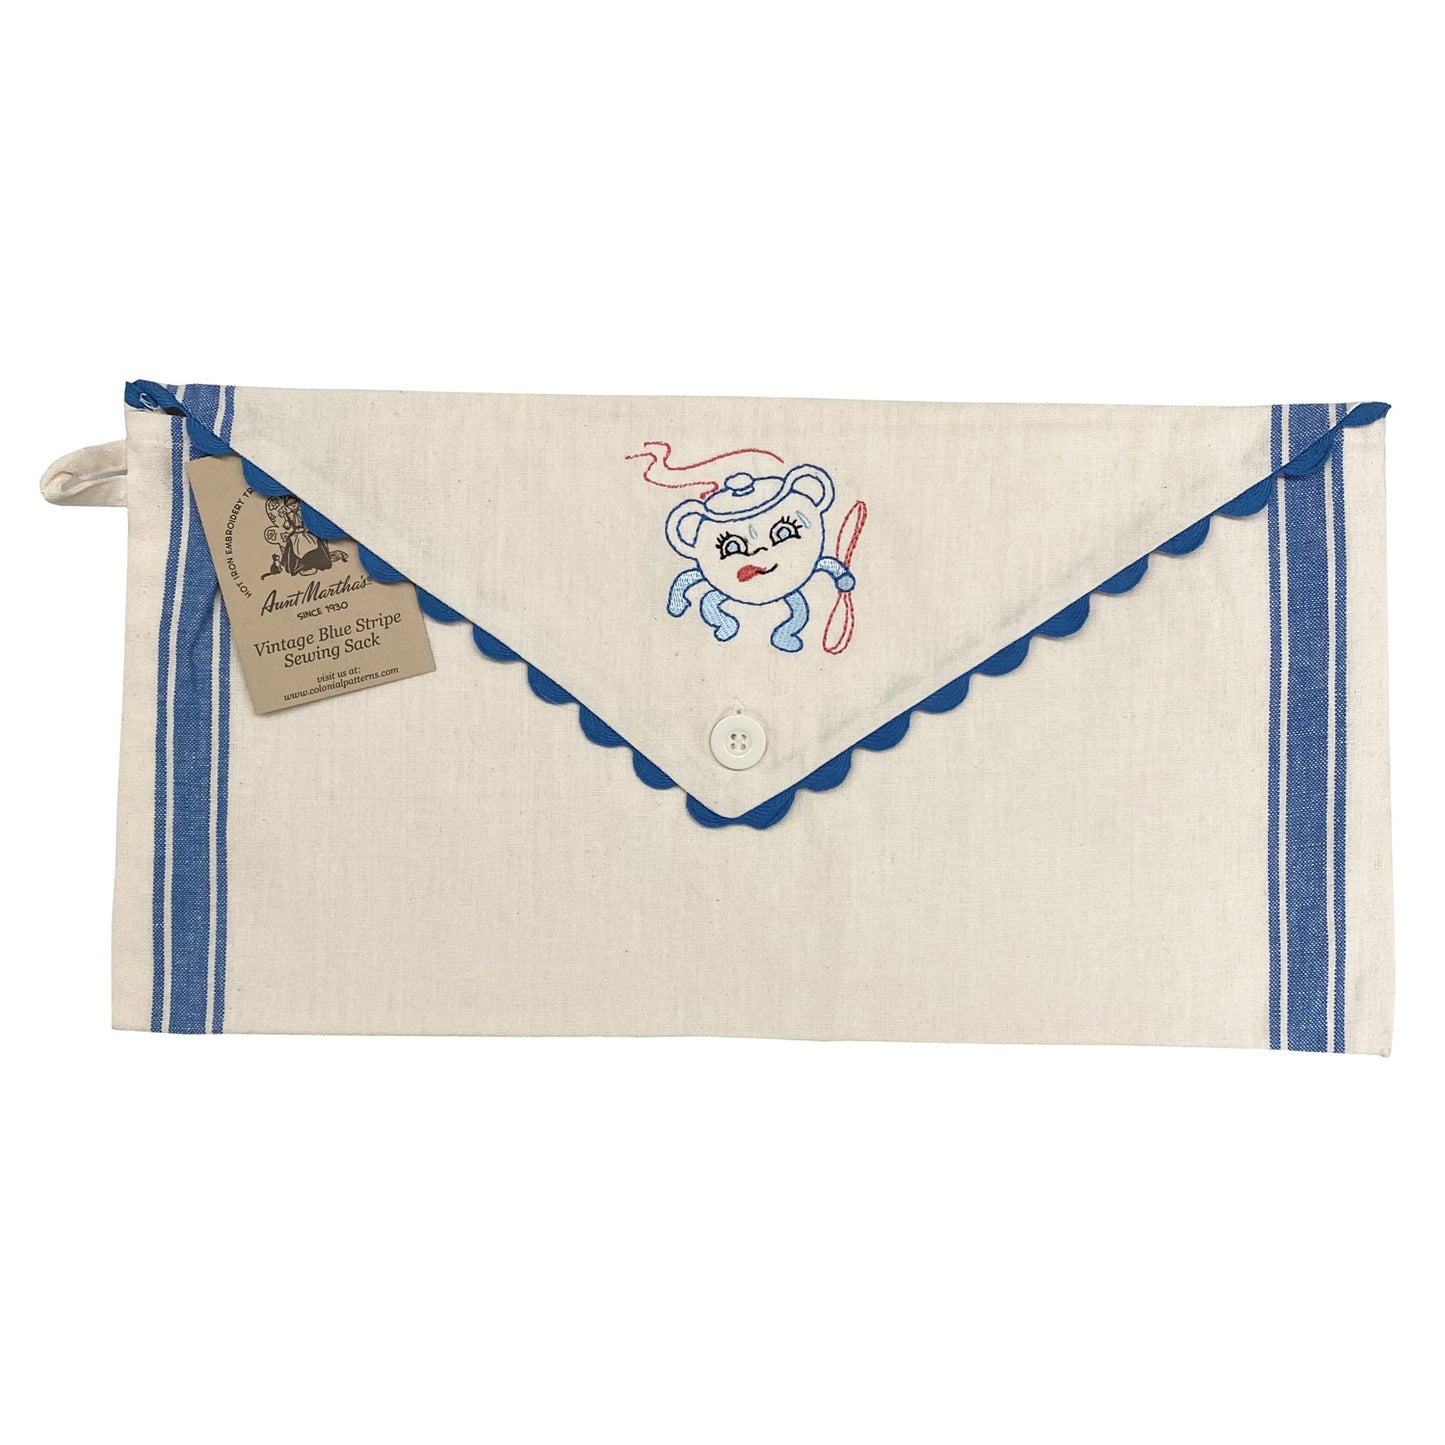 Vintage Sriped Sewing Sack Organizer - Blue Stripe Primary Image